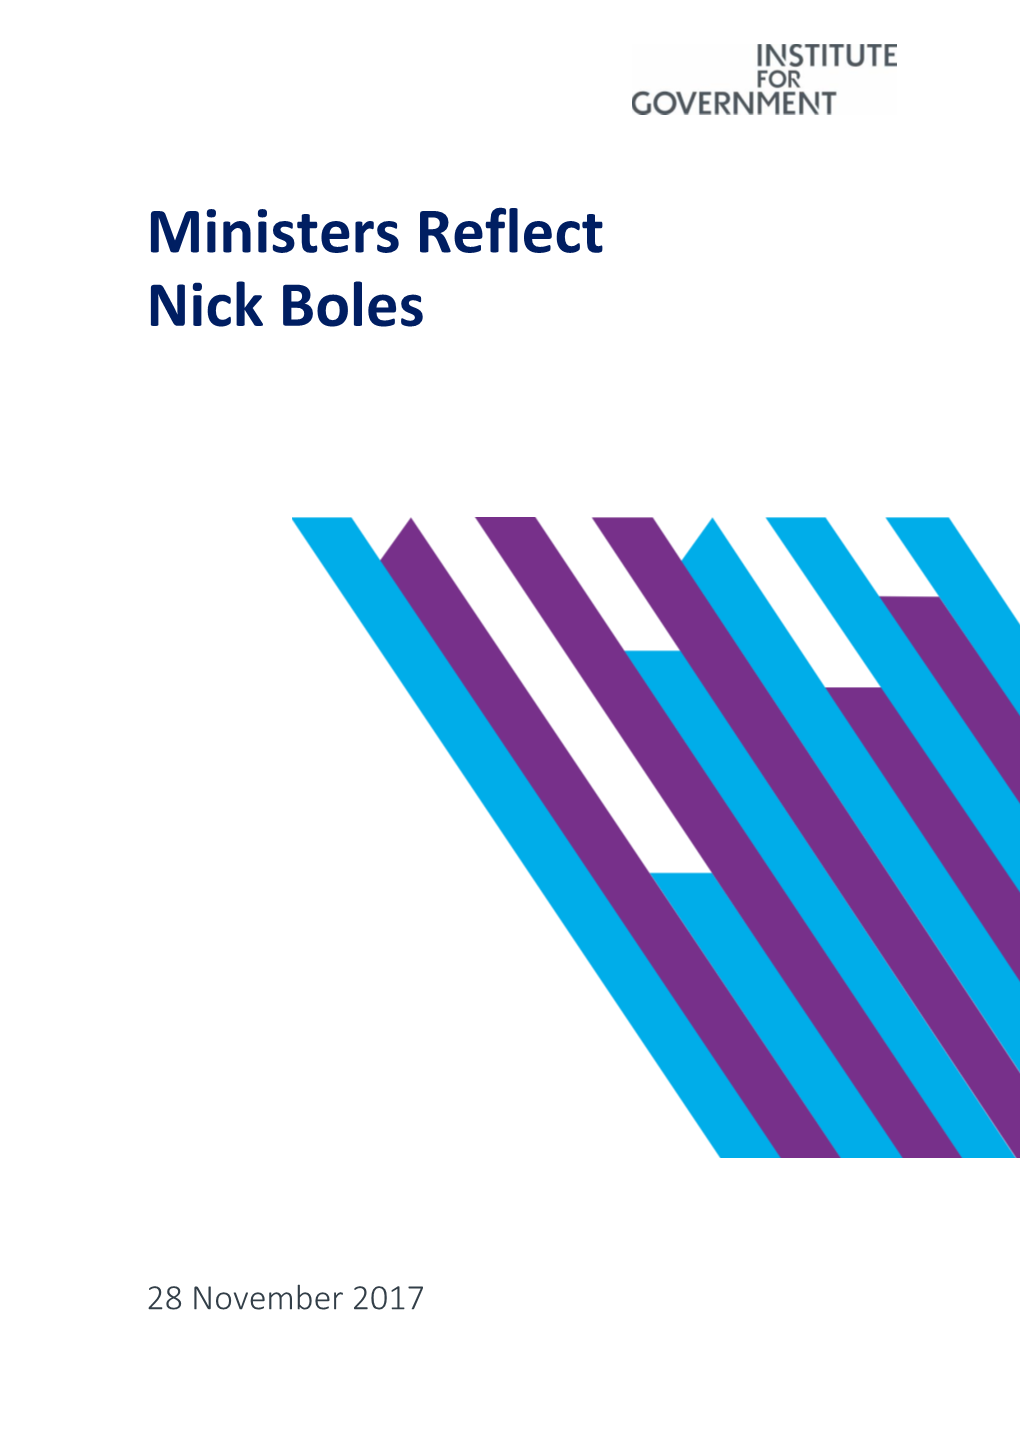 Ministers Reflect Nick Boles